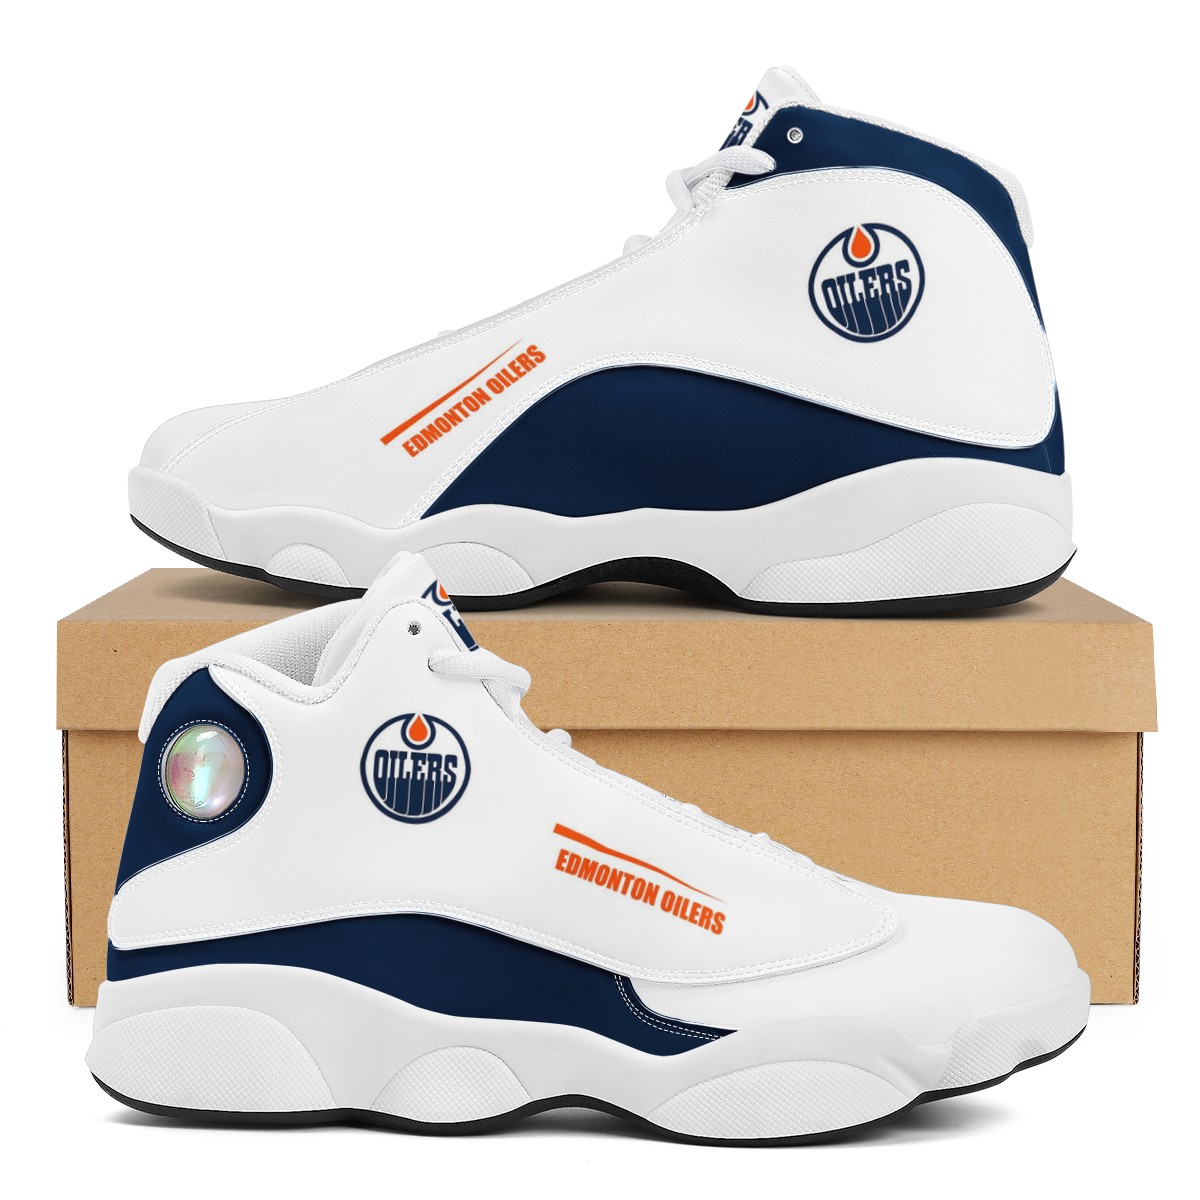 Men's Edmonton Oilers Limited Edition JD13 Sneakers 001